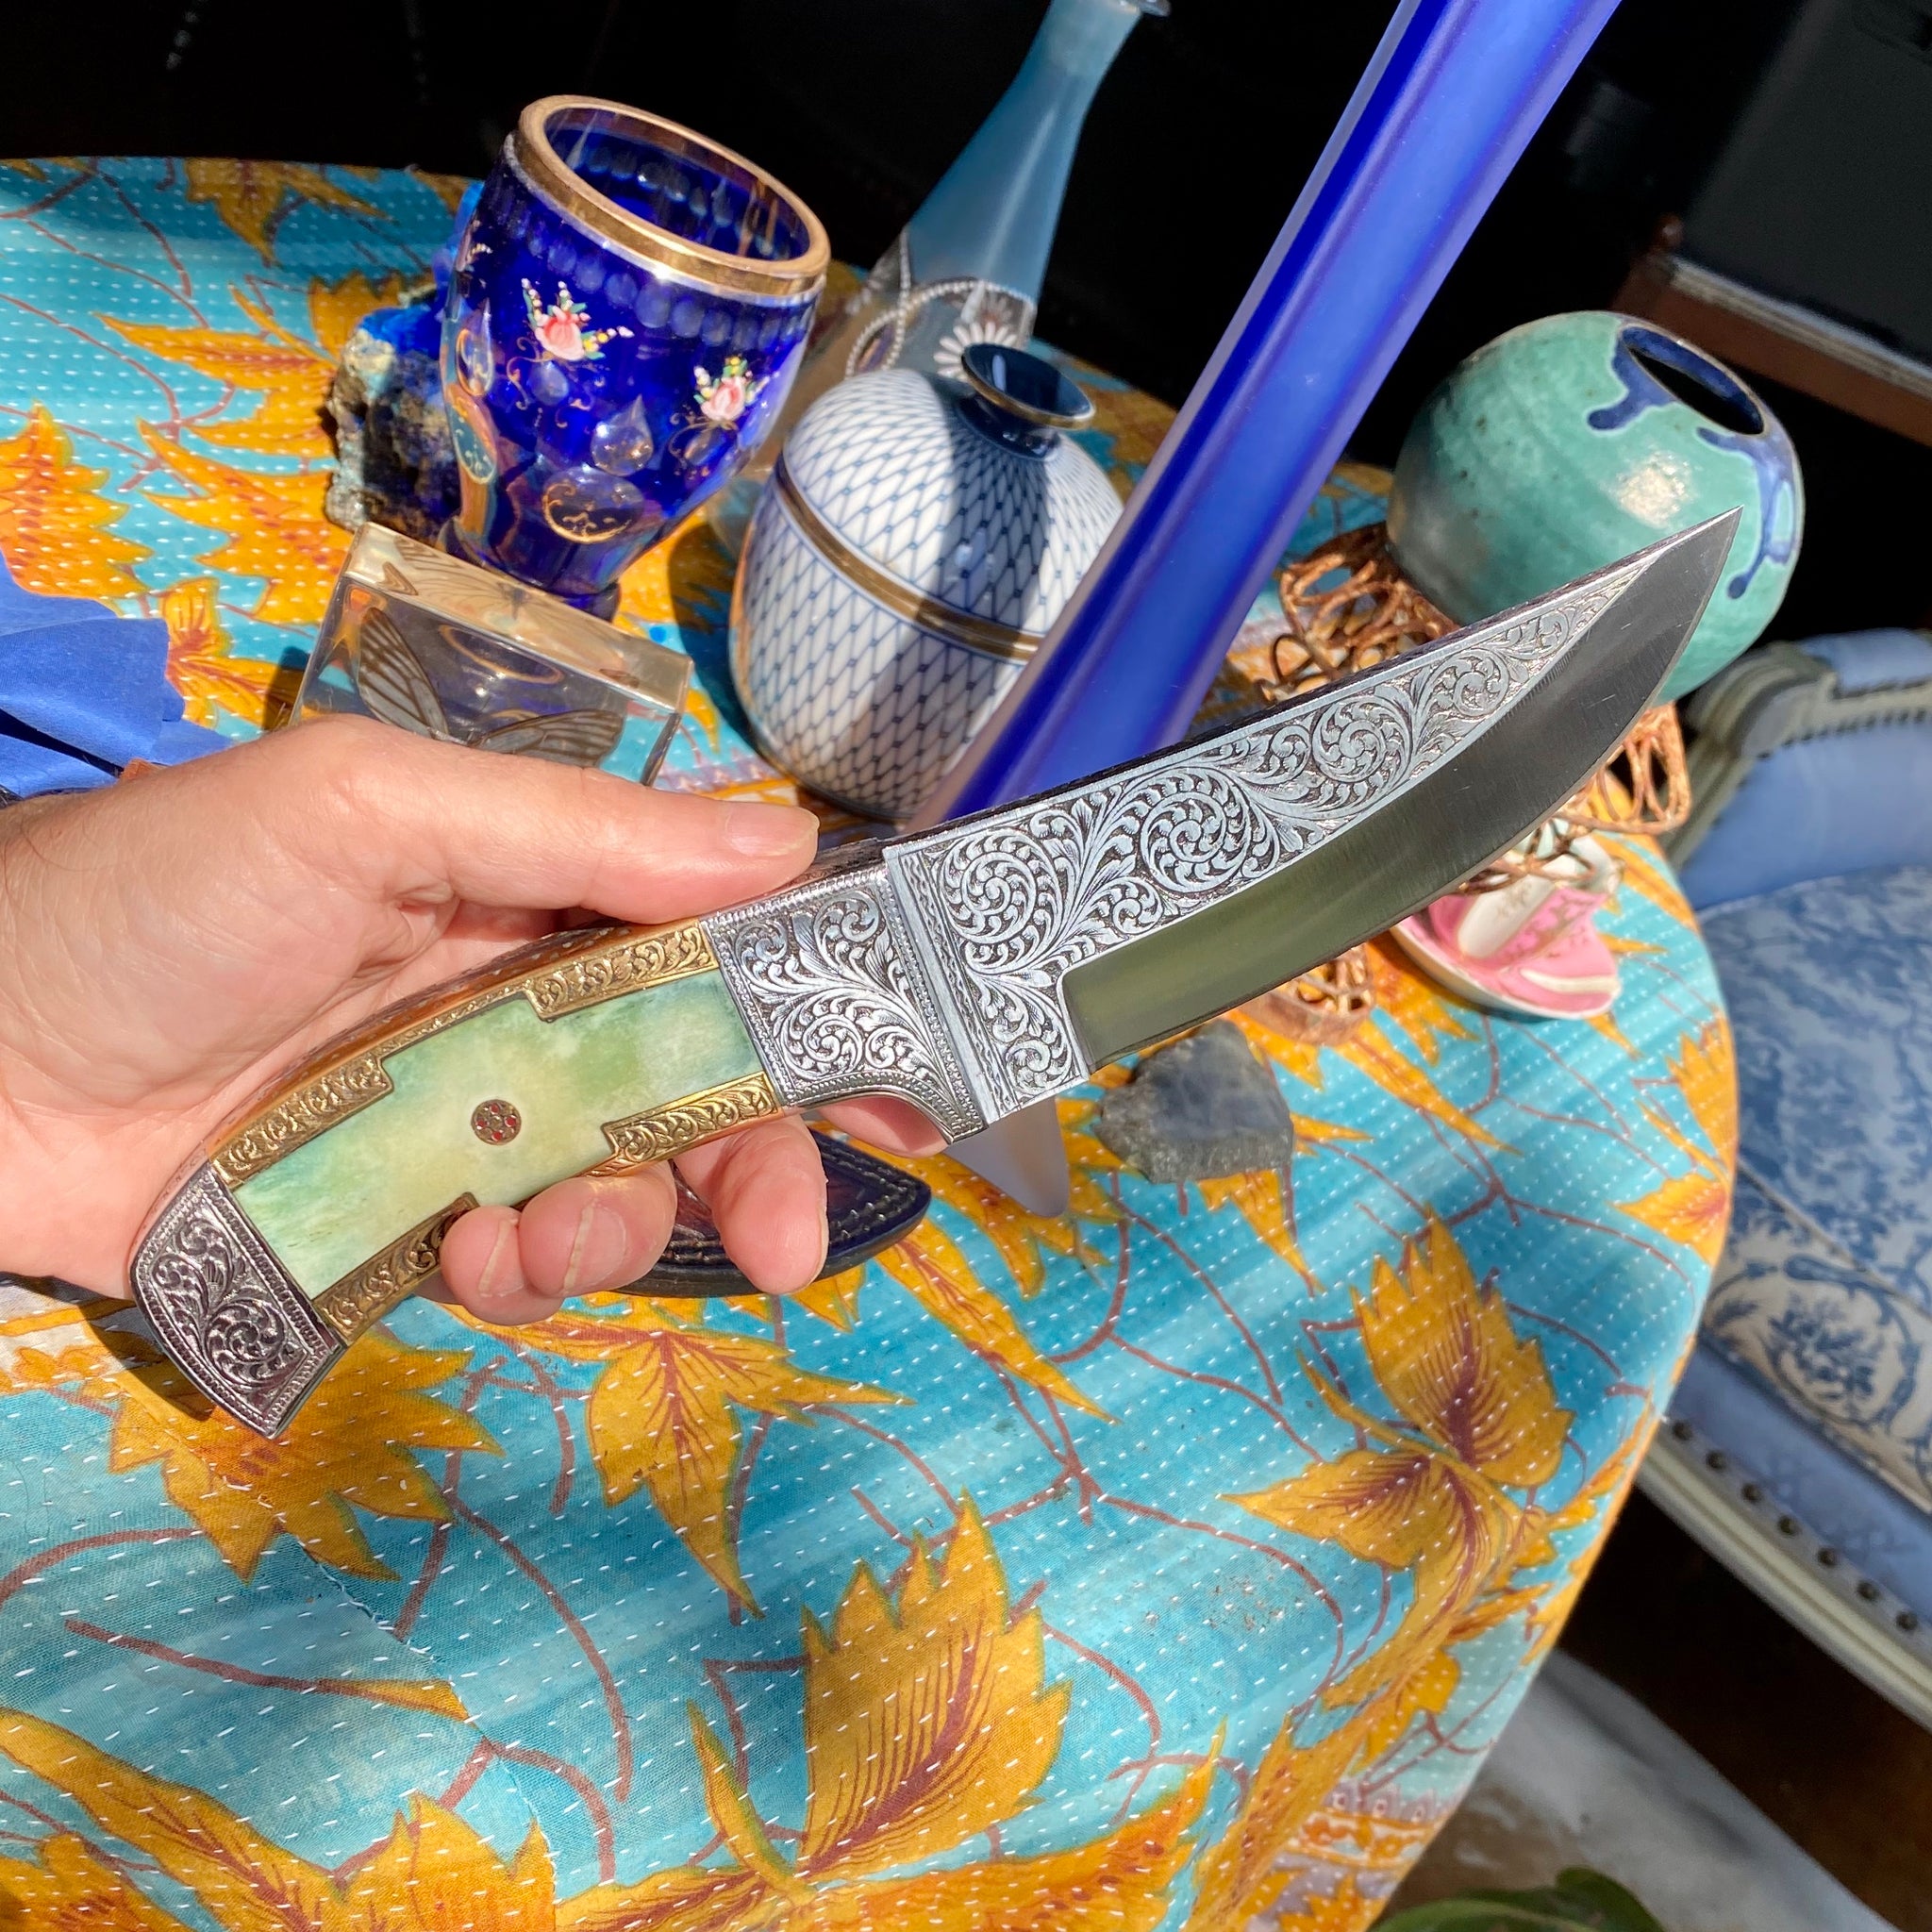 Stone handle Hunting Knife, Handmade Knife with Leather Seath